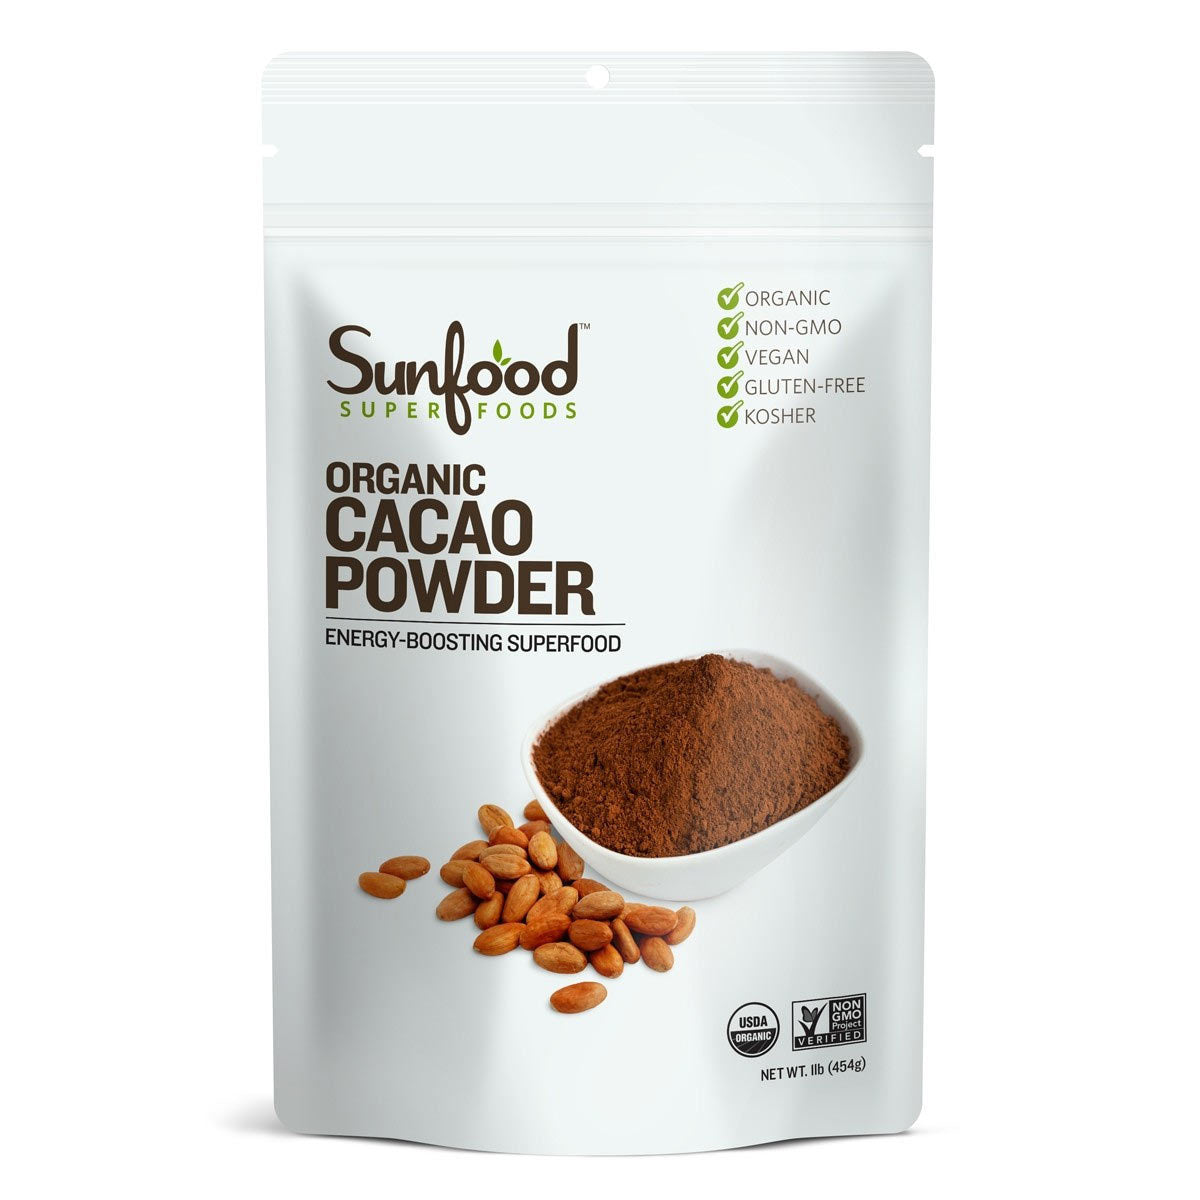 Primary image of Organic Cacao Powder